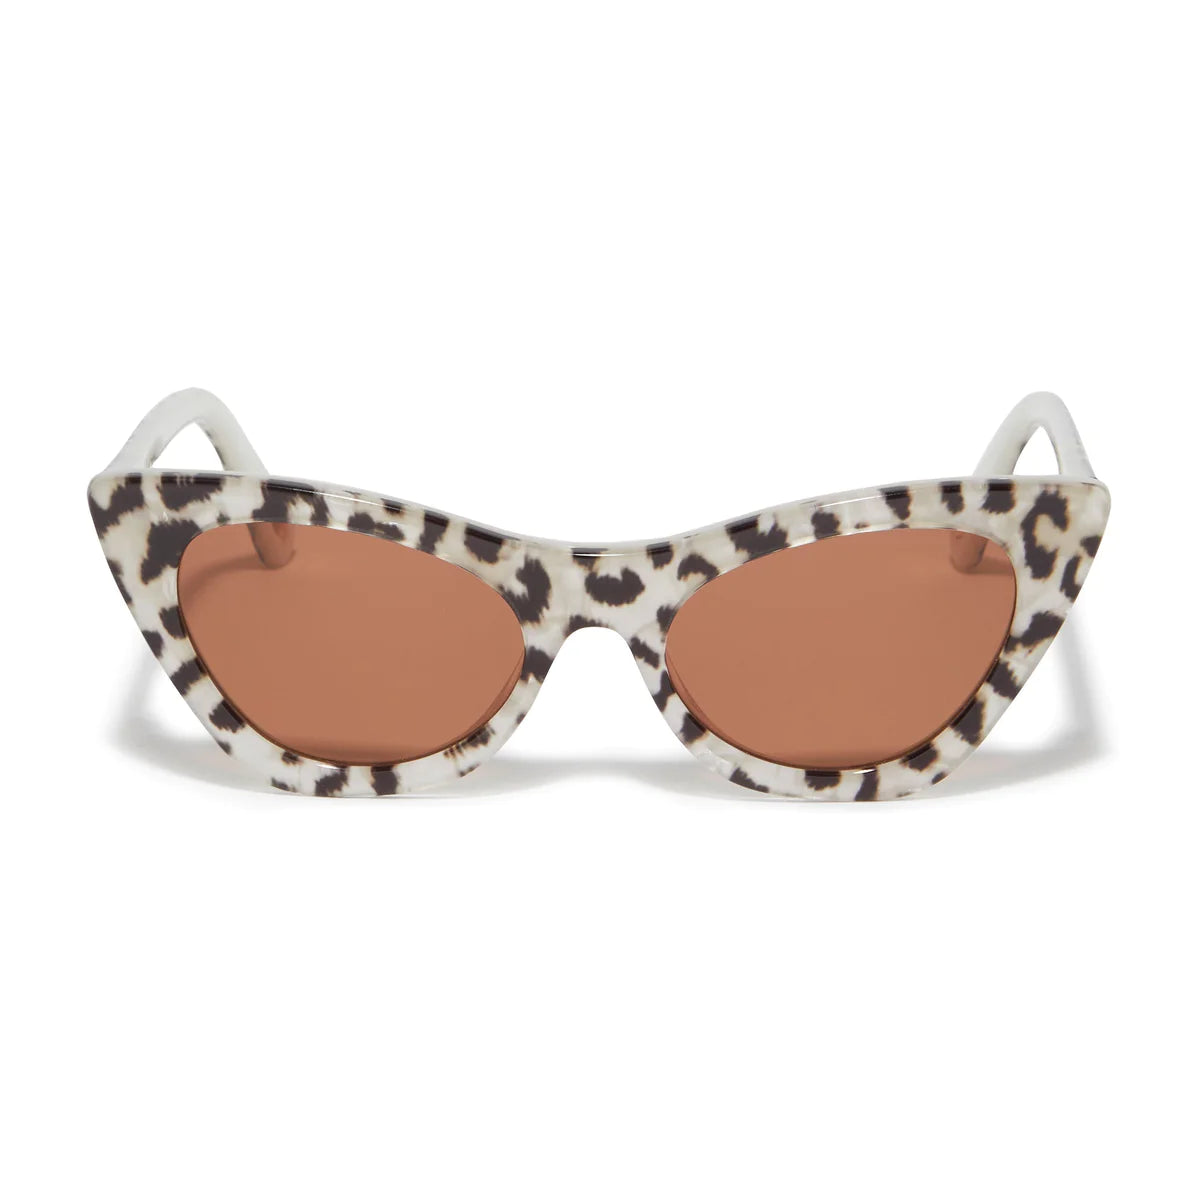 Sunglasses- Downtown Cat-Eye Sunglasses